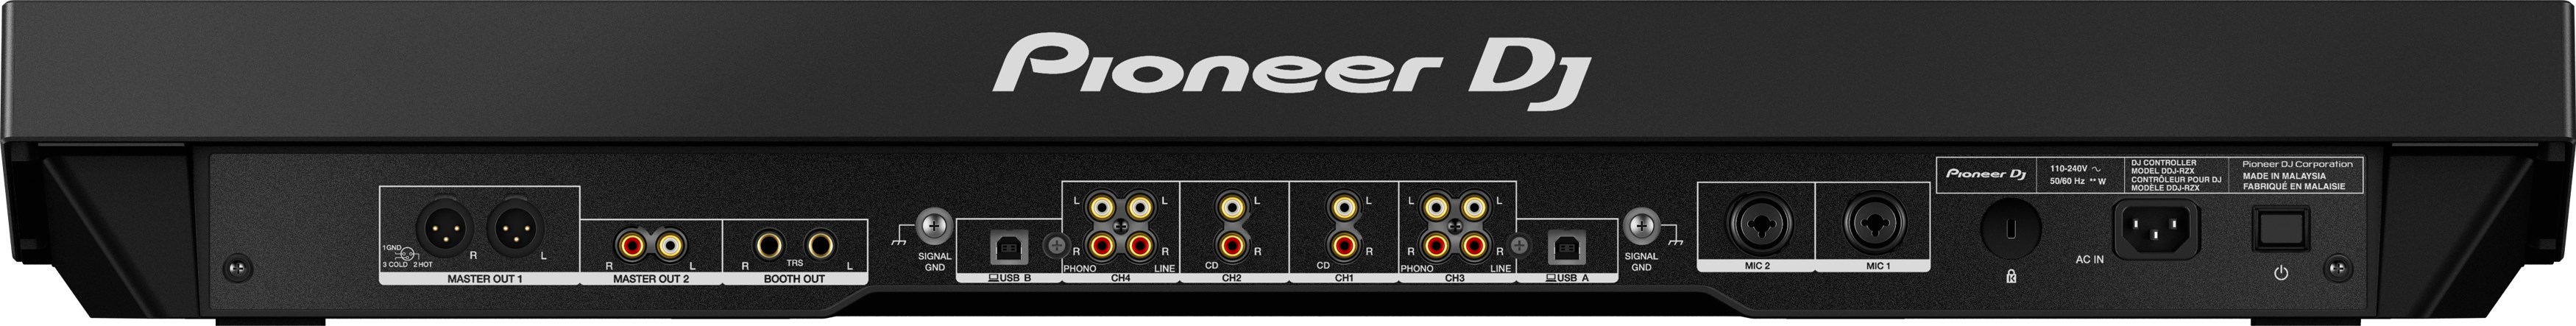 Pioneer Dj Ddj-rzx - Controlador DJ USB - Variation 3